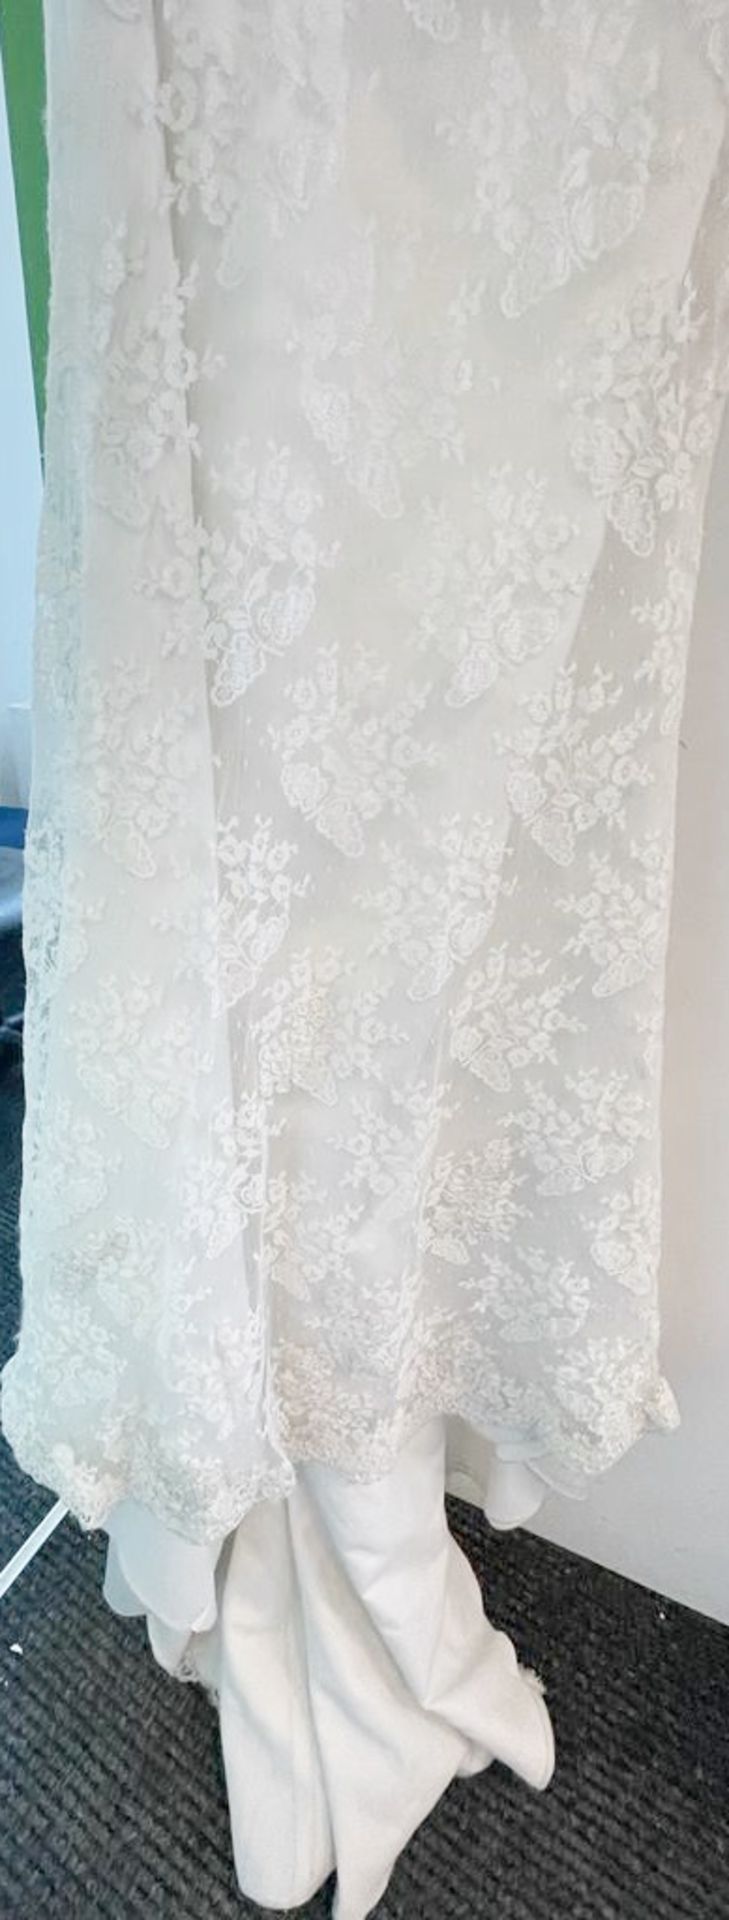 1 x LUSAN MANDONGUS 'Jamie' Designer Chantilly Lace Wedding Dress Bridal Gown, With Satin - Image 3 of 13